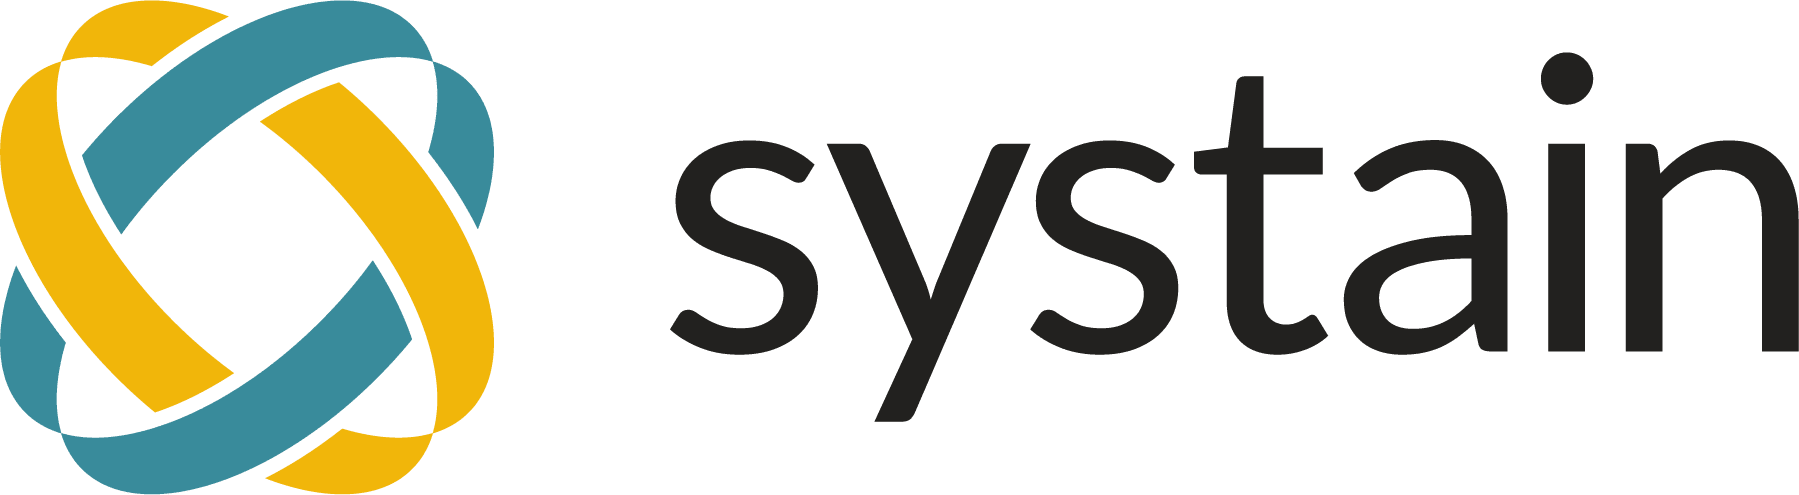 systain + logo